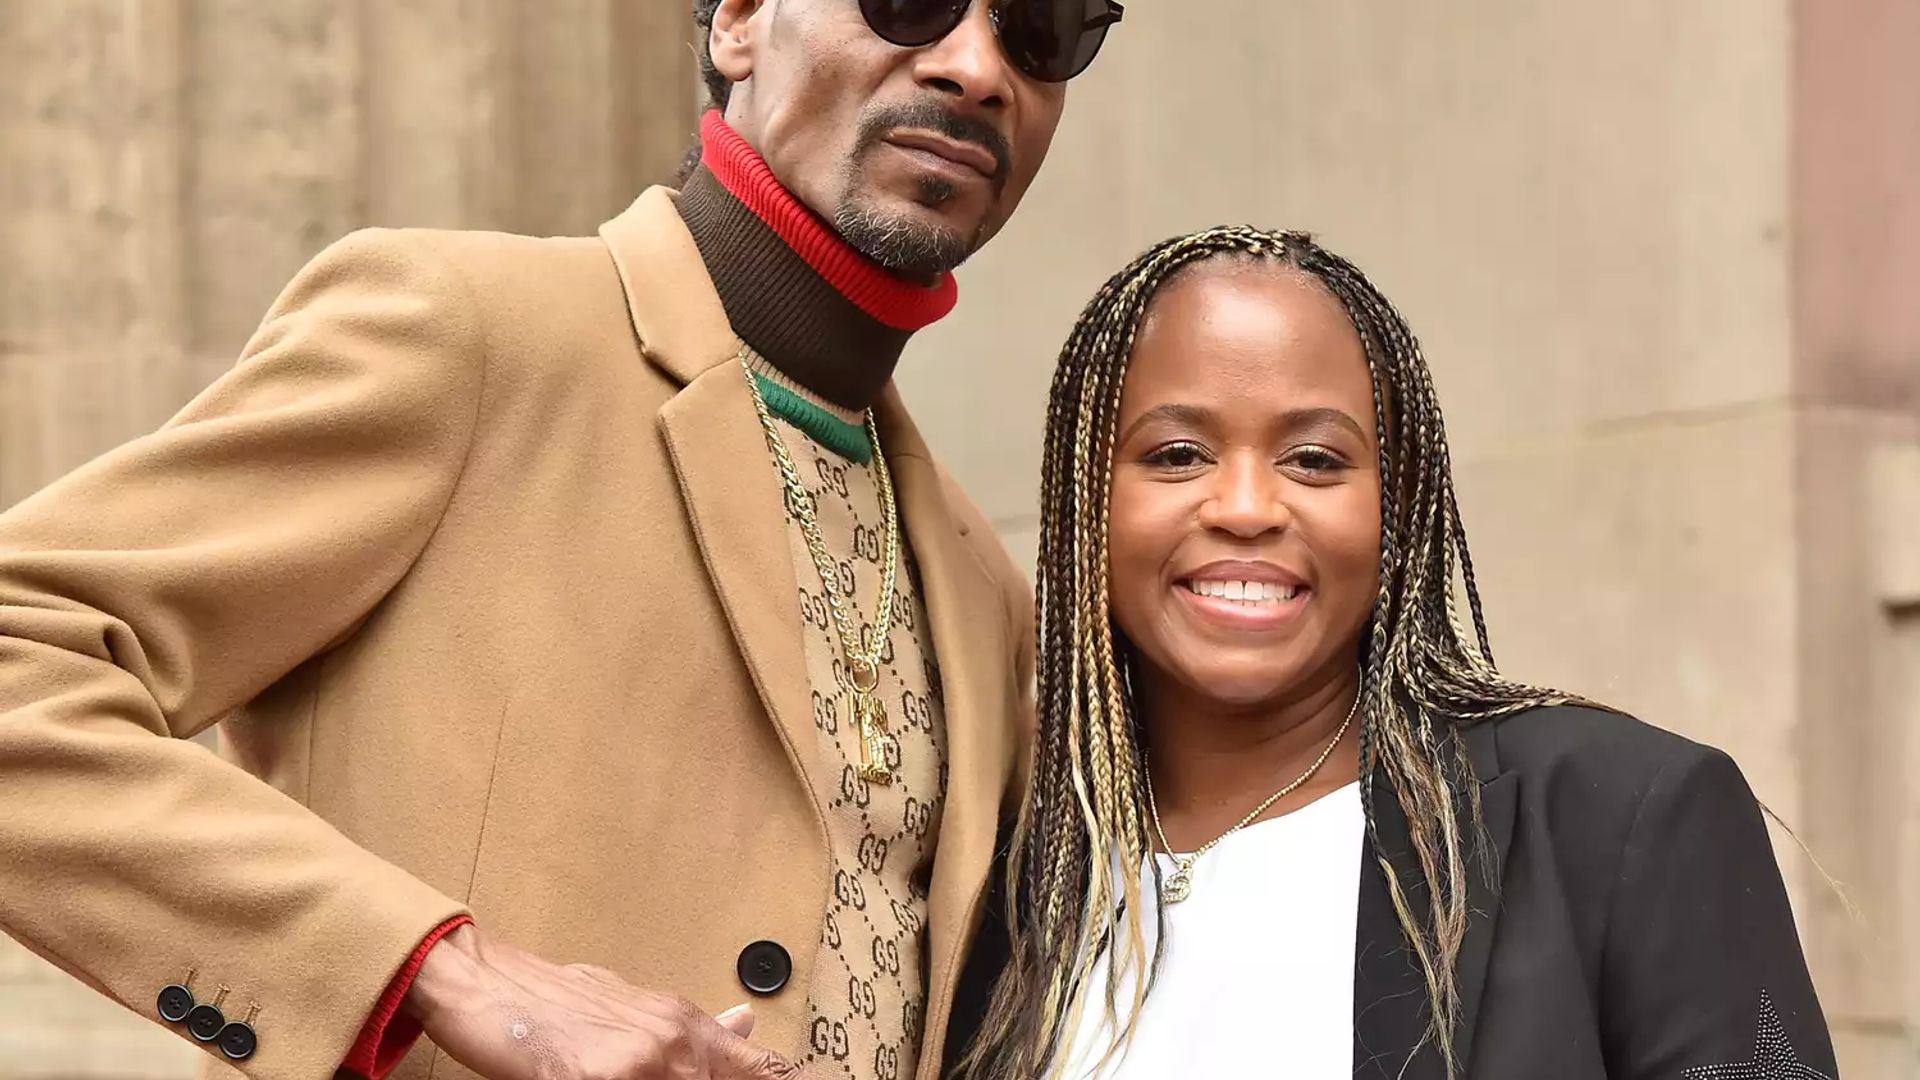 Who is Snoop Dogg’s wife Shante Broadus?